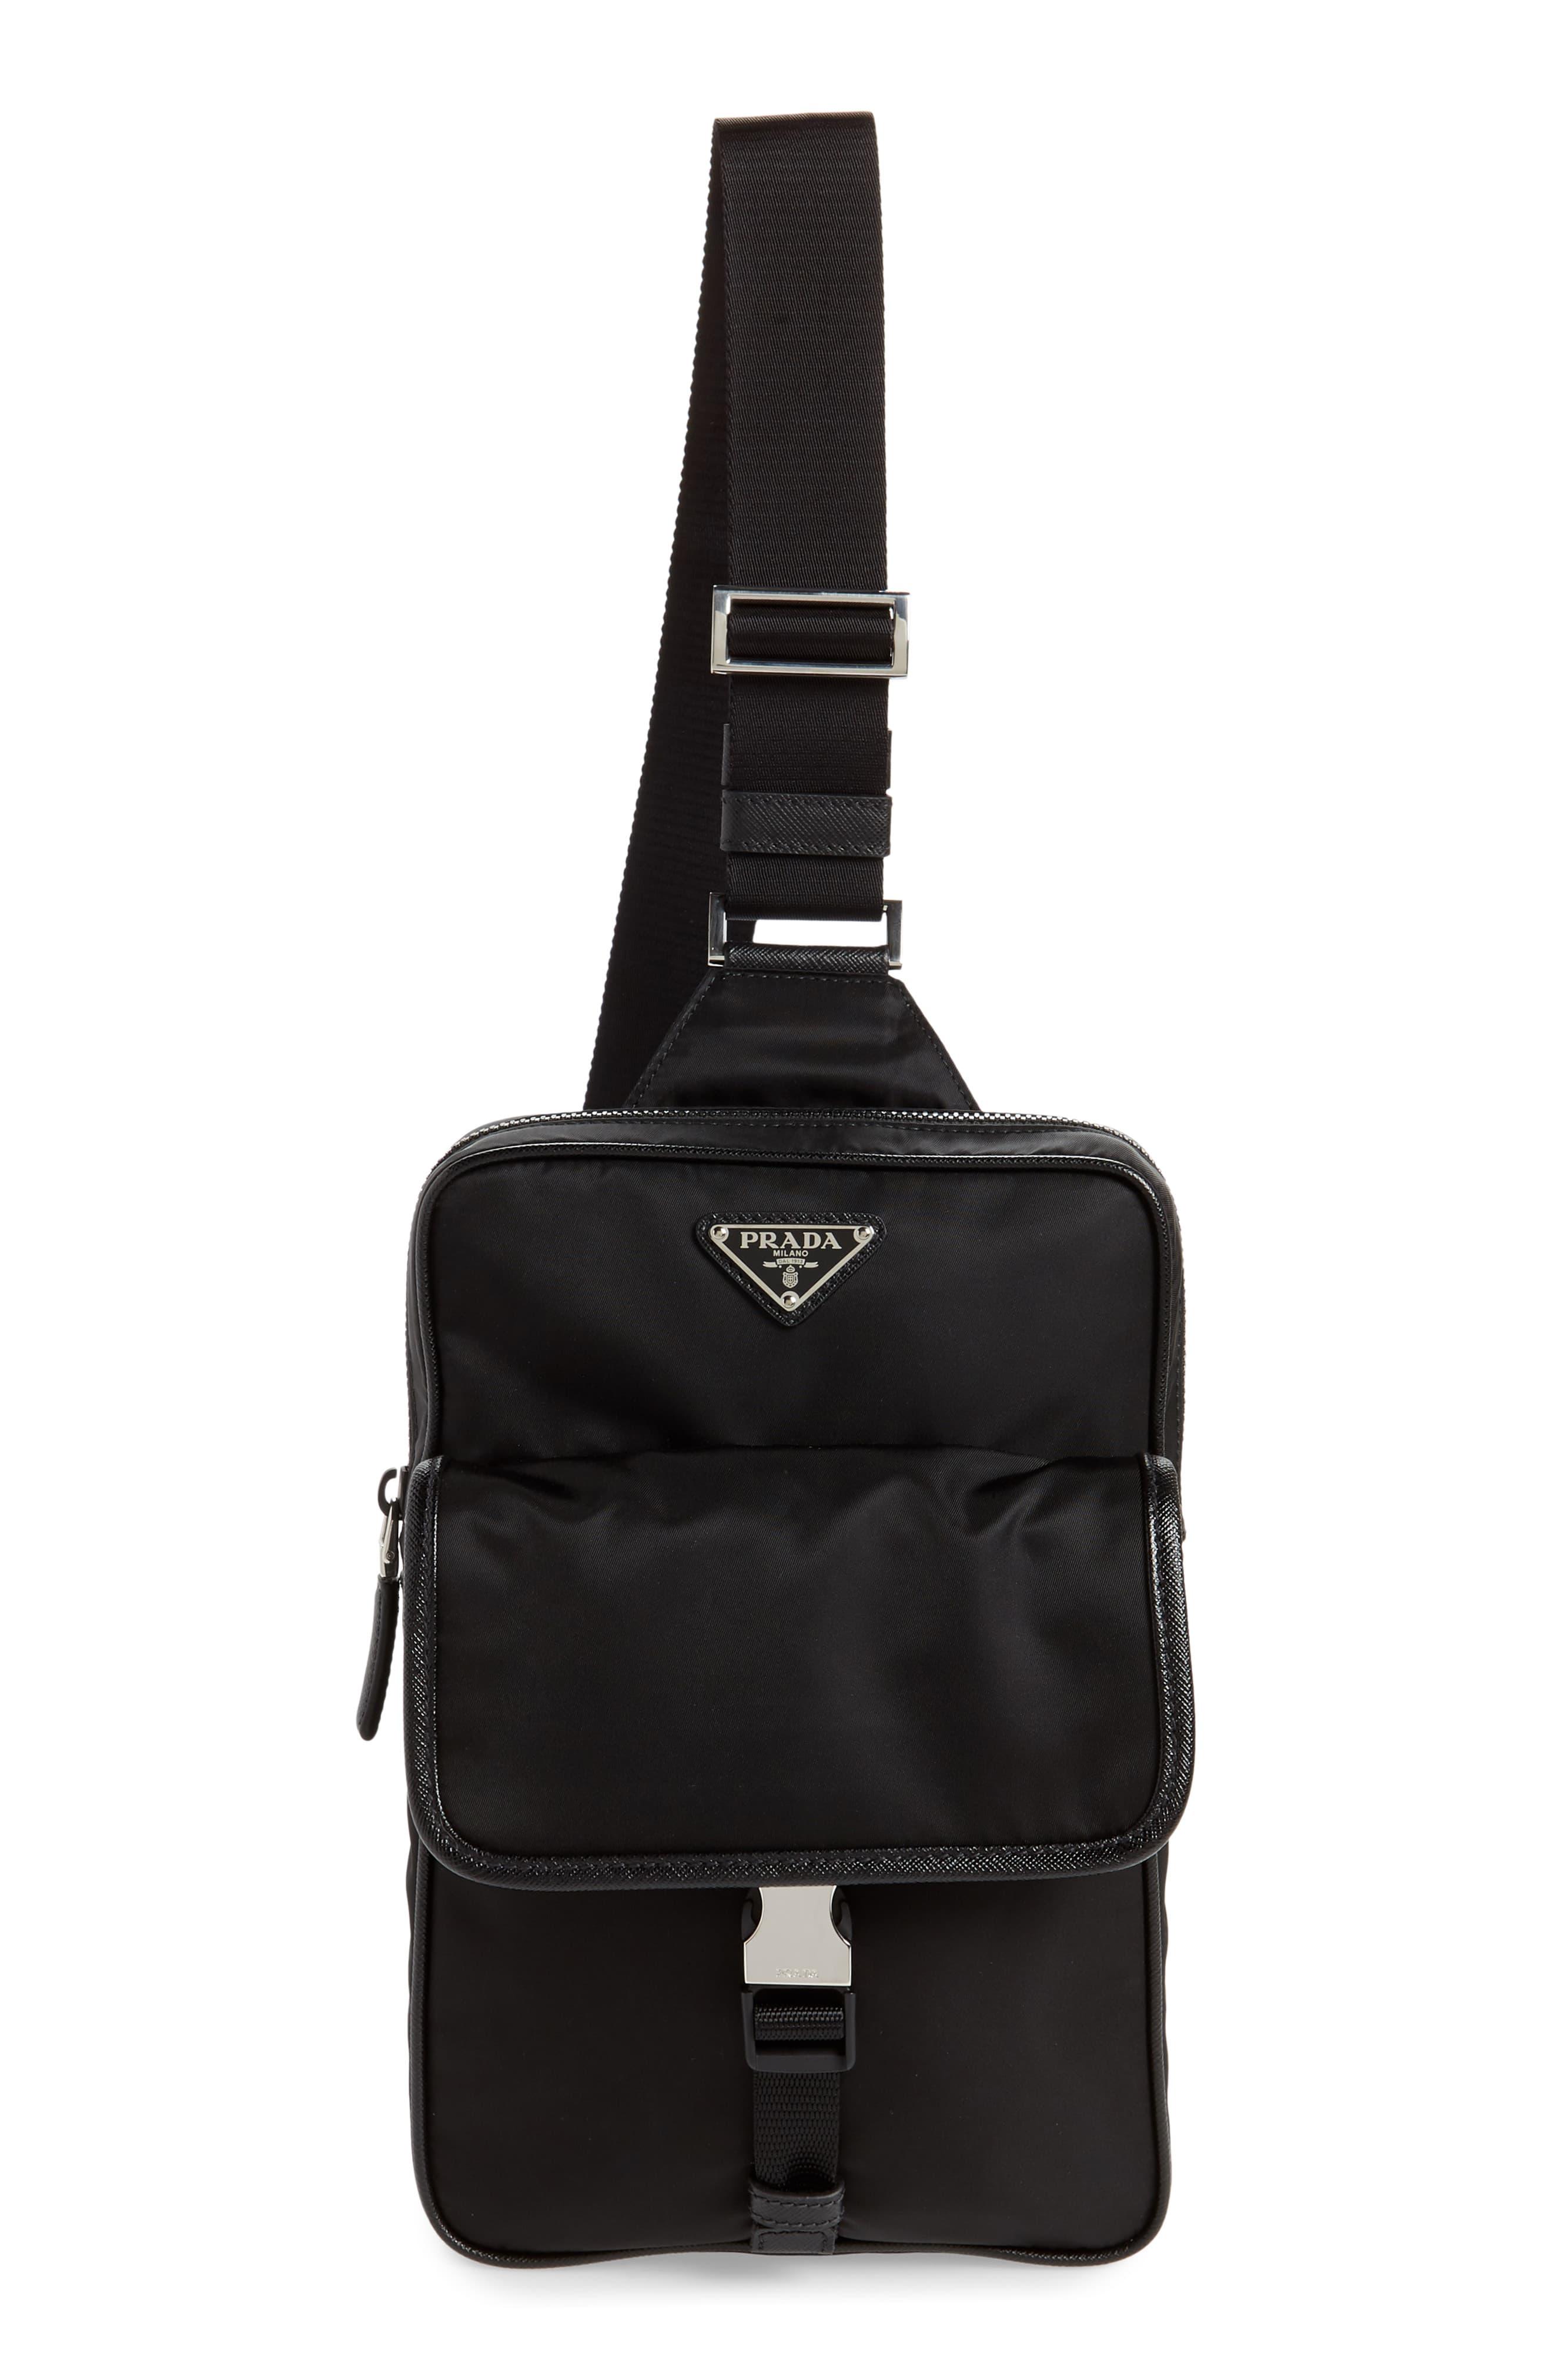 Prada Synthetic Medium Nylon Sling Bag in Nero (Black) for Men - Lyst